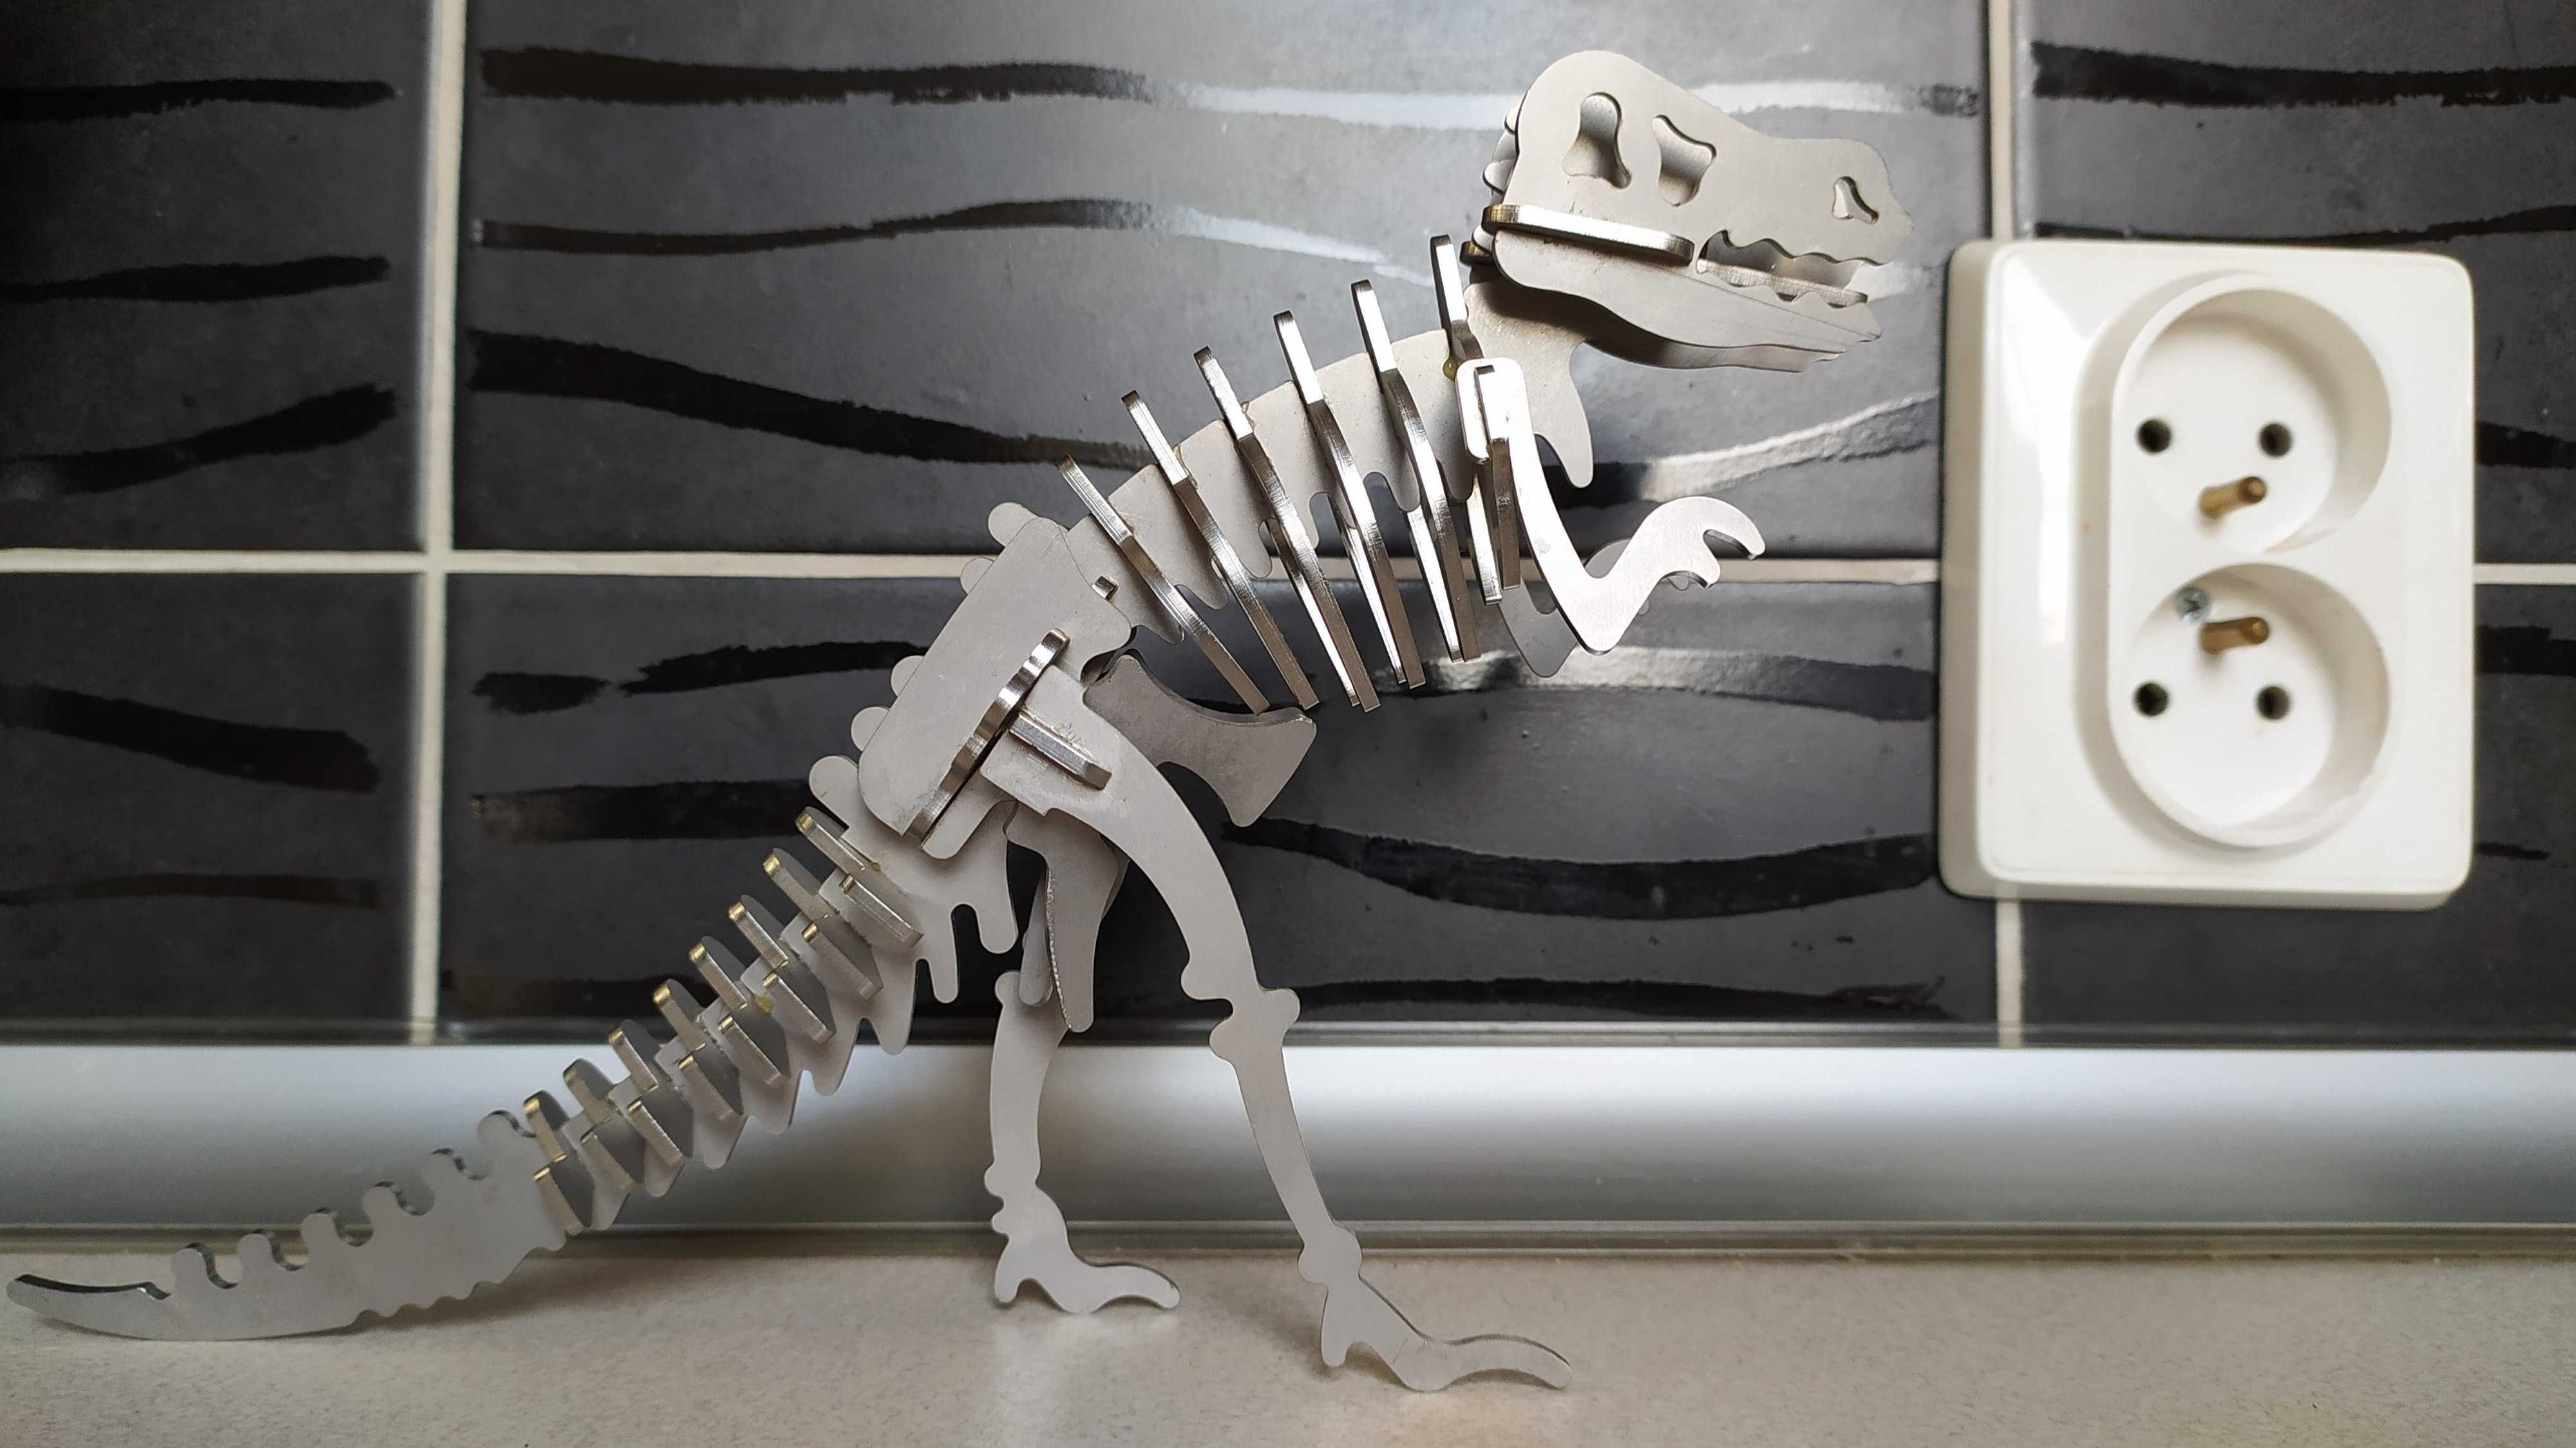 Dinozaur Puzle 3D Metal TYRANOSAUR Super Prezent na Święta dla Niego